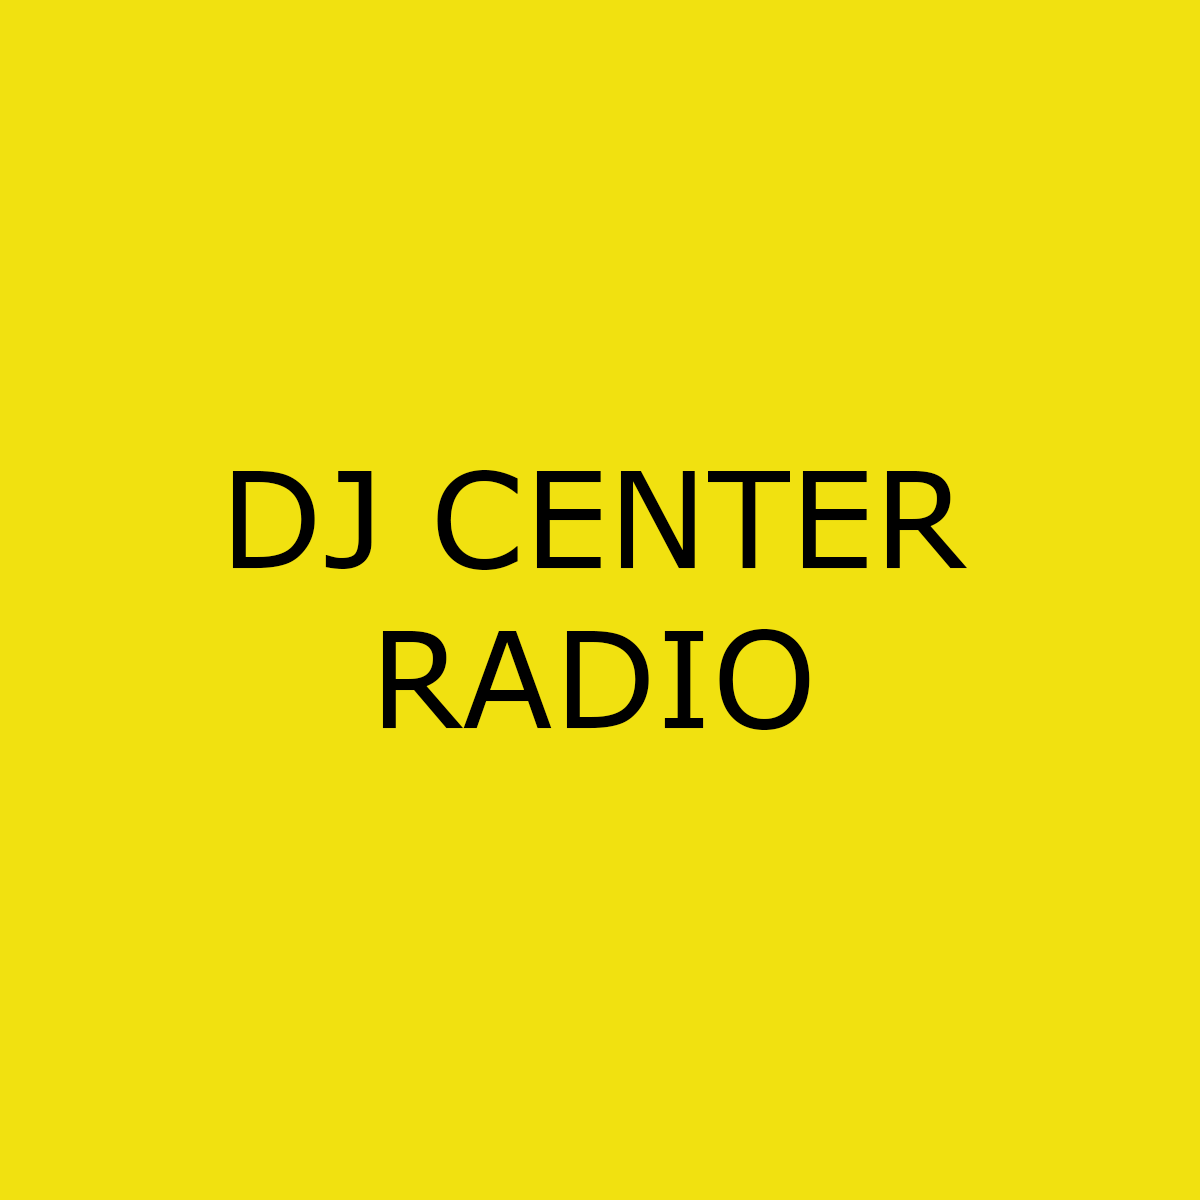 DJ CENTER RADIO